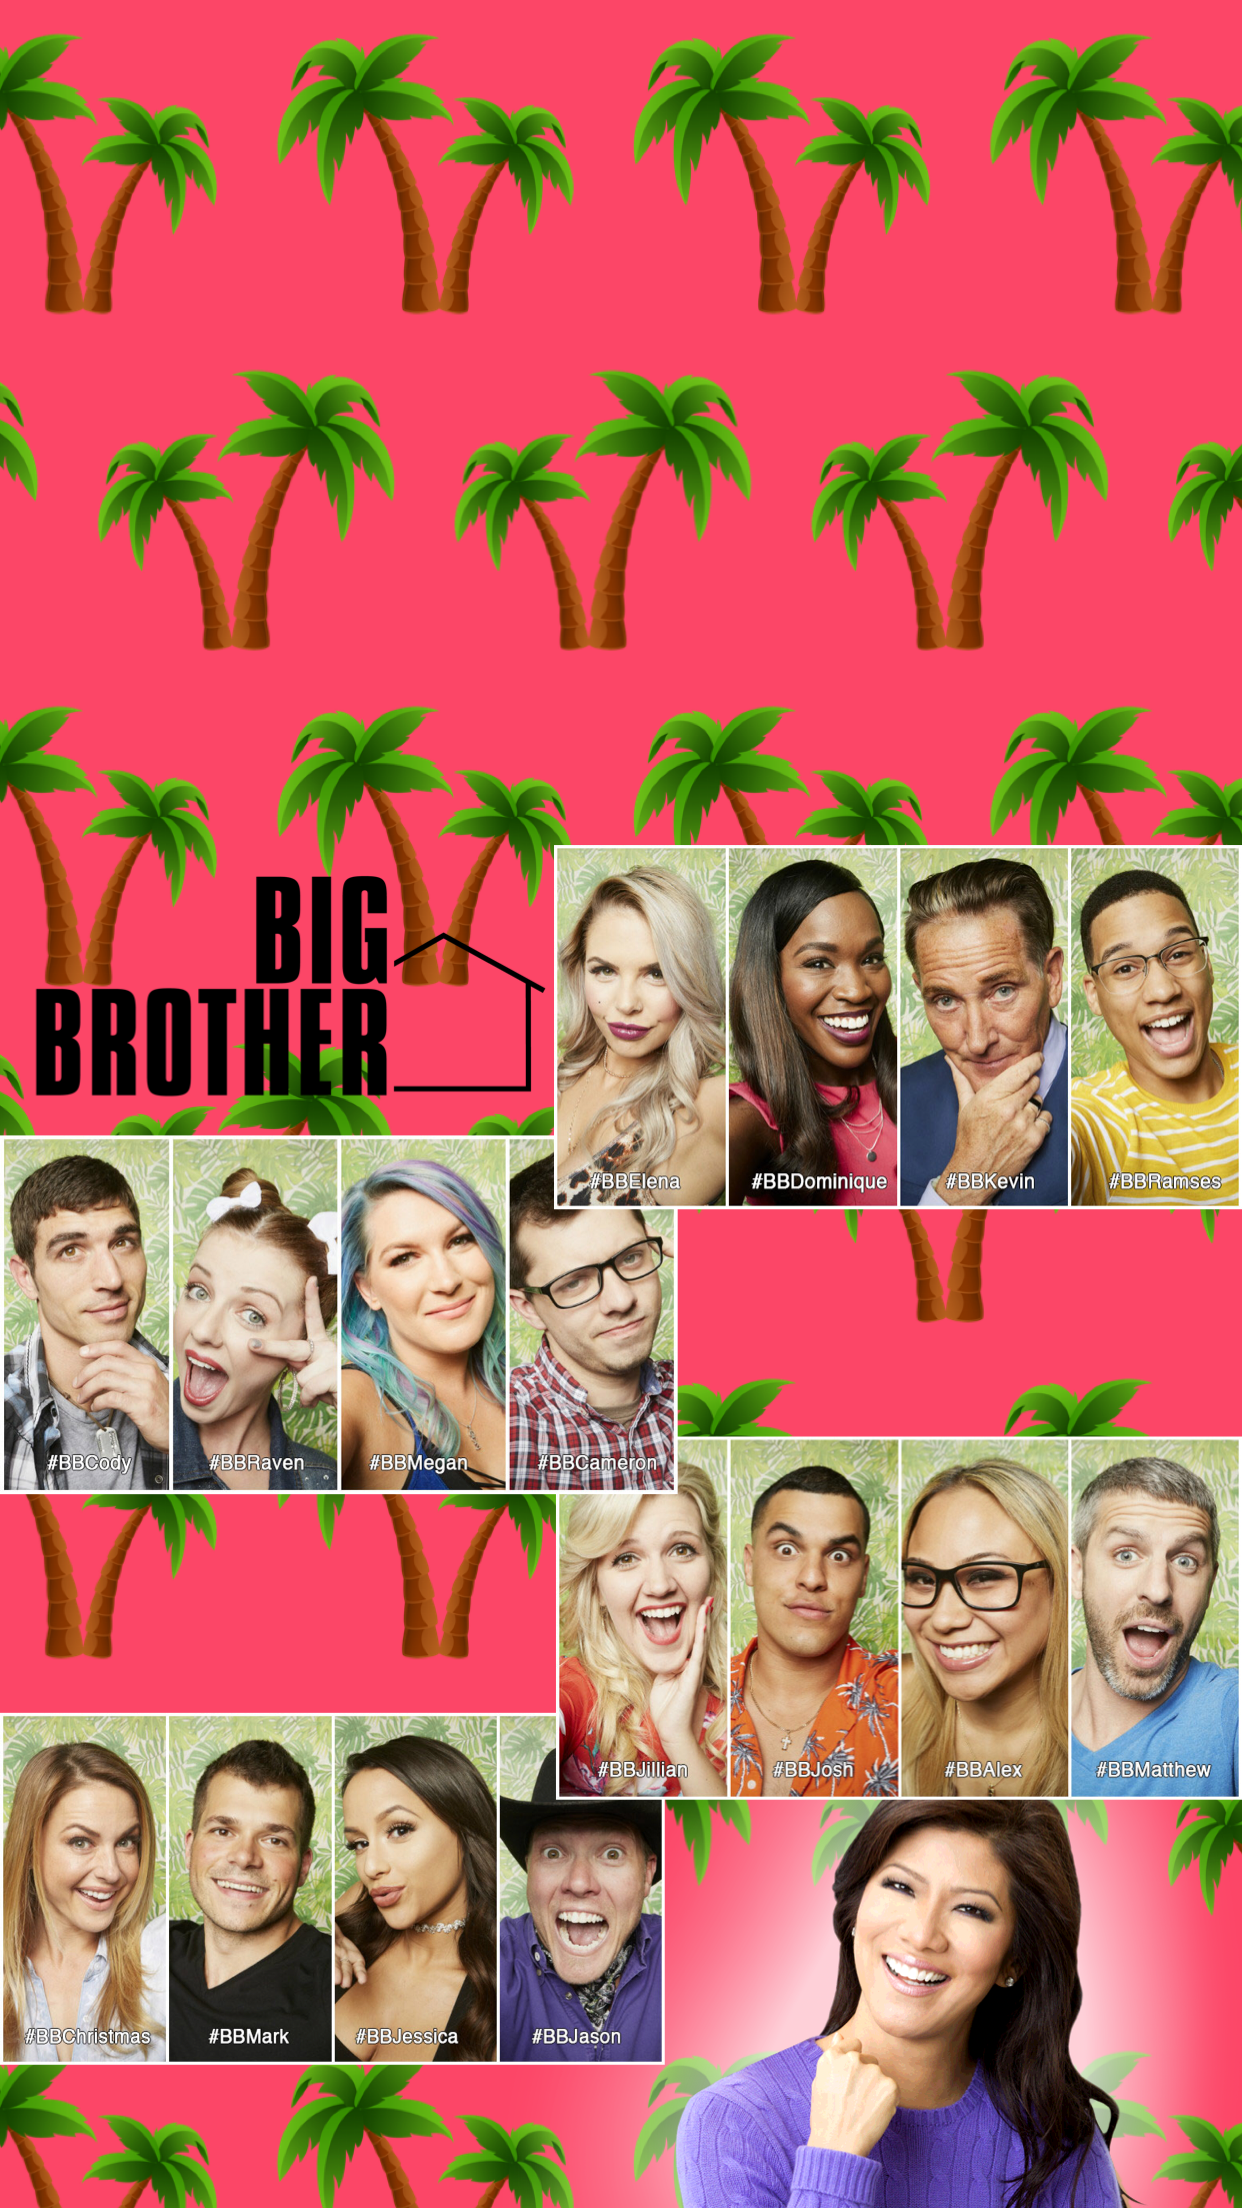 Big Brother 19 phone wallpaper I made